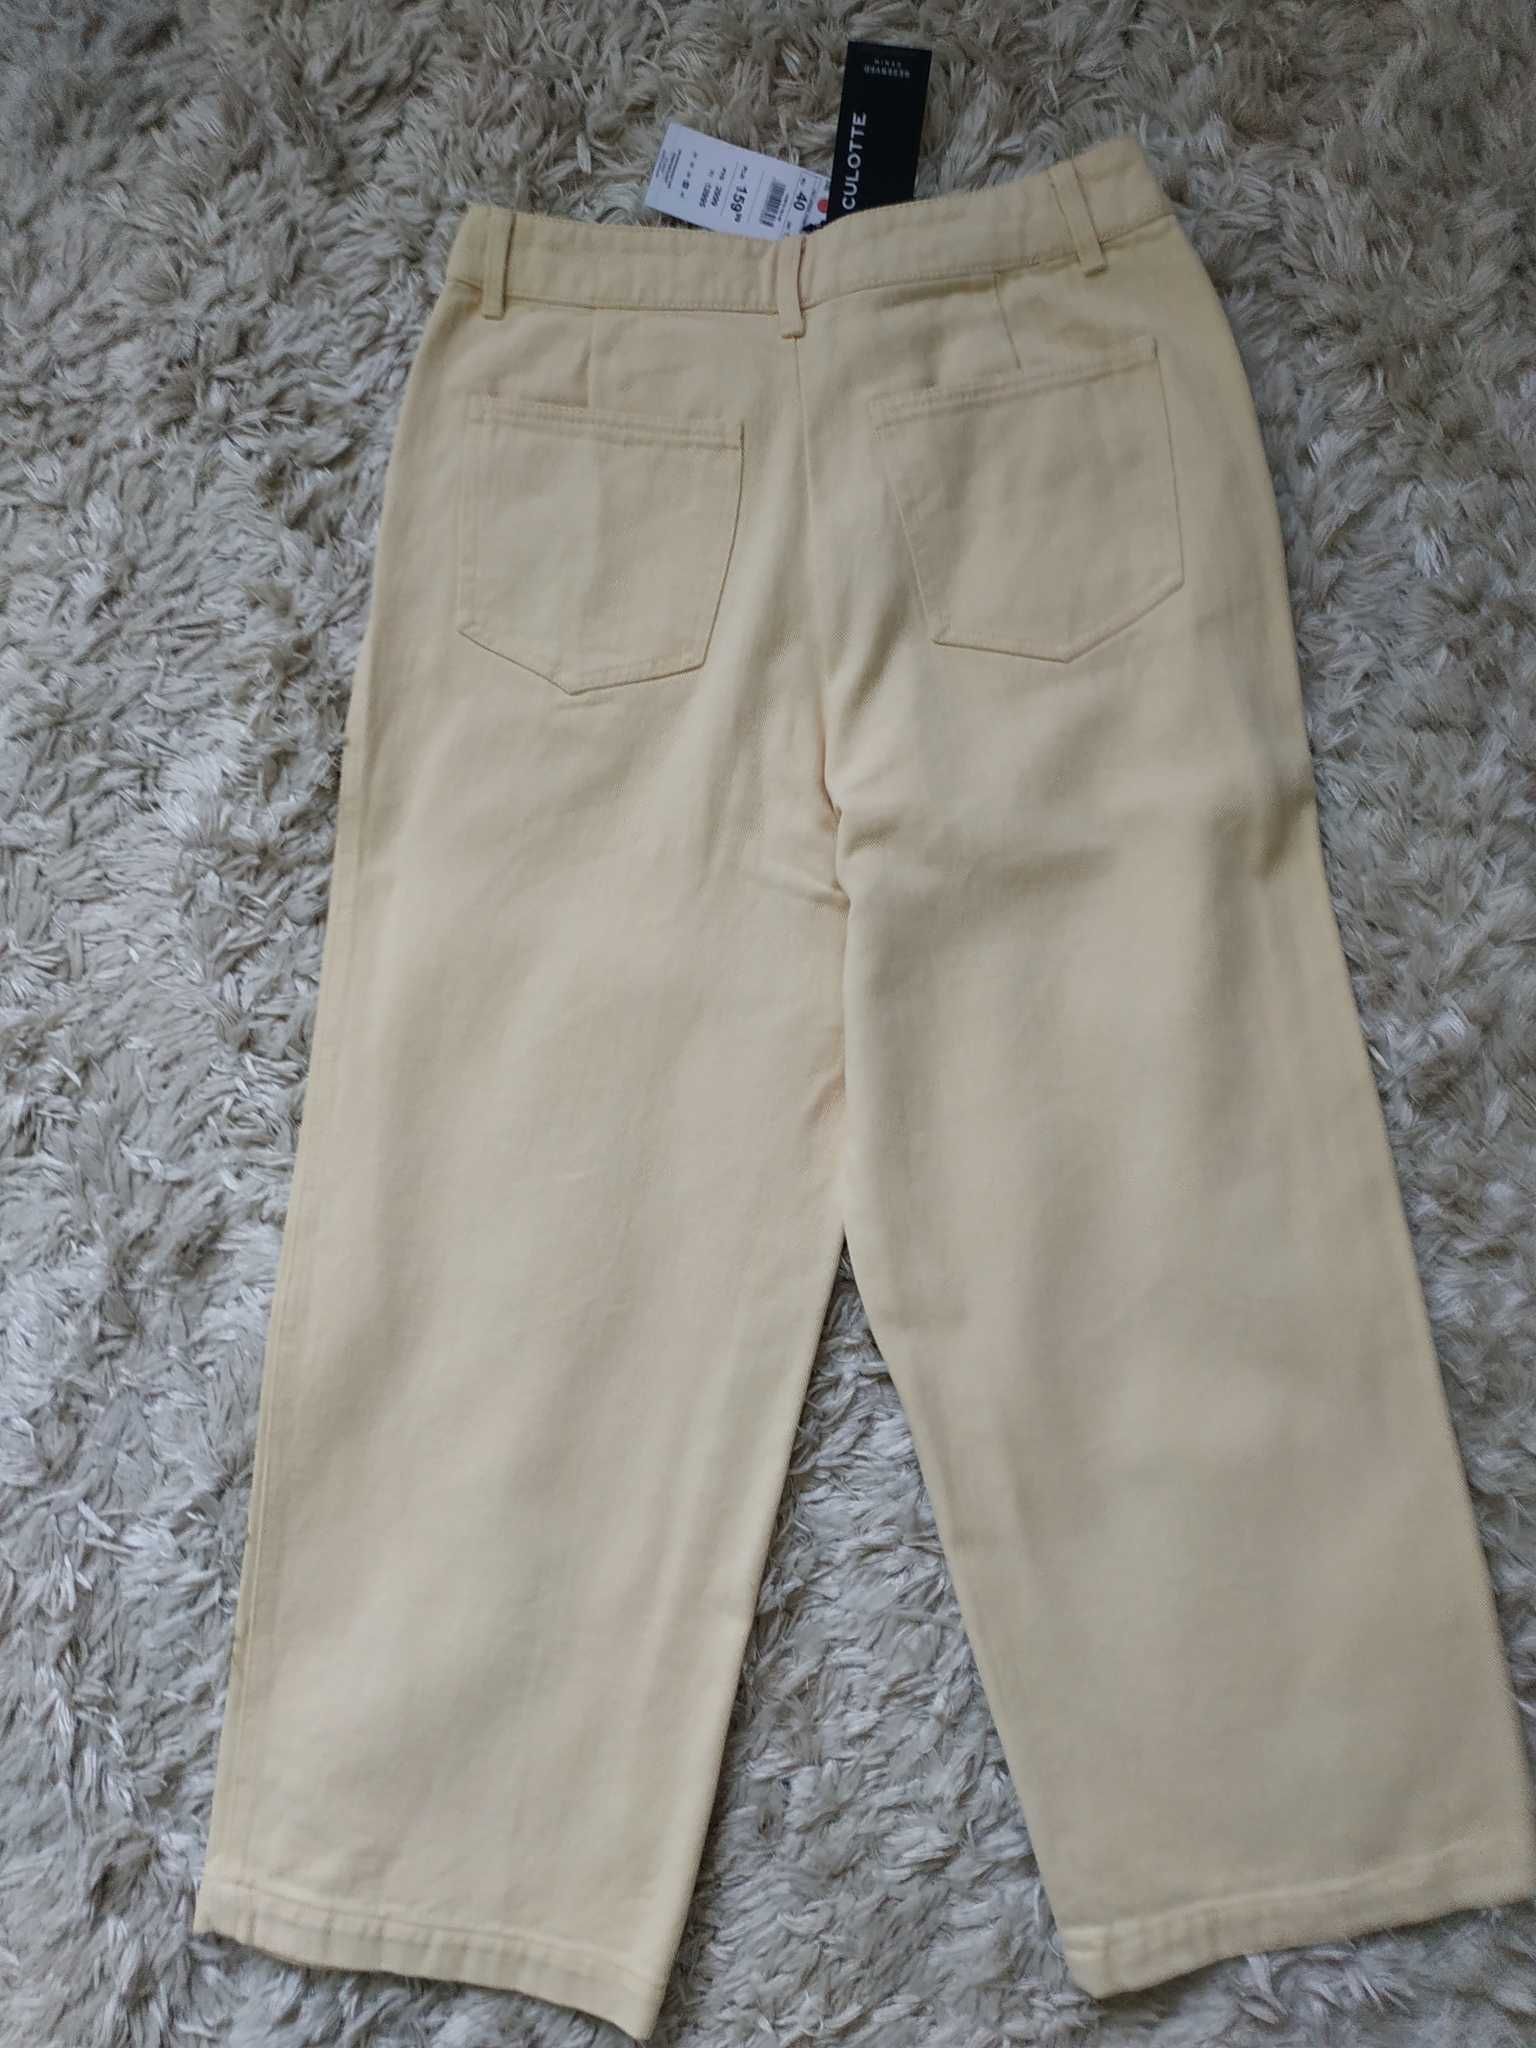 NOWE jeansy RESERVED 40 L spodnie CULOTTE kolor jasnożółty nogawka 7/8